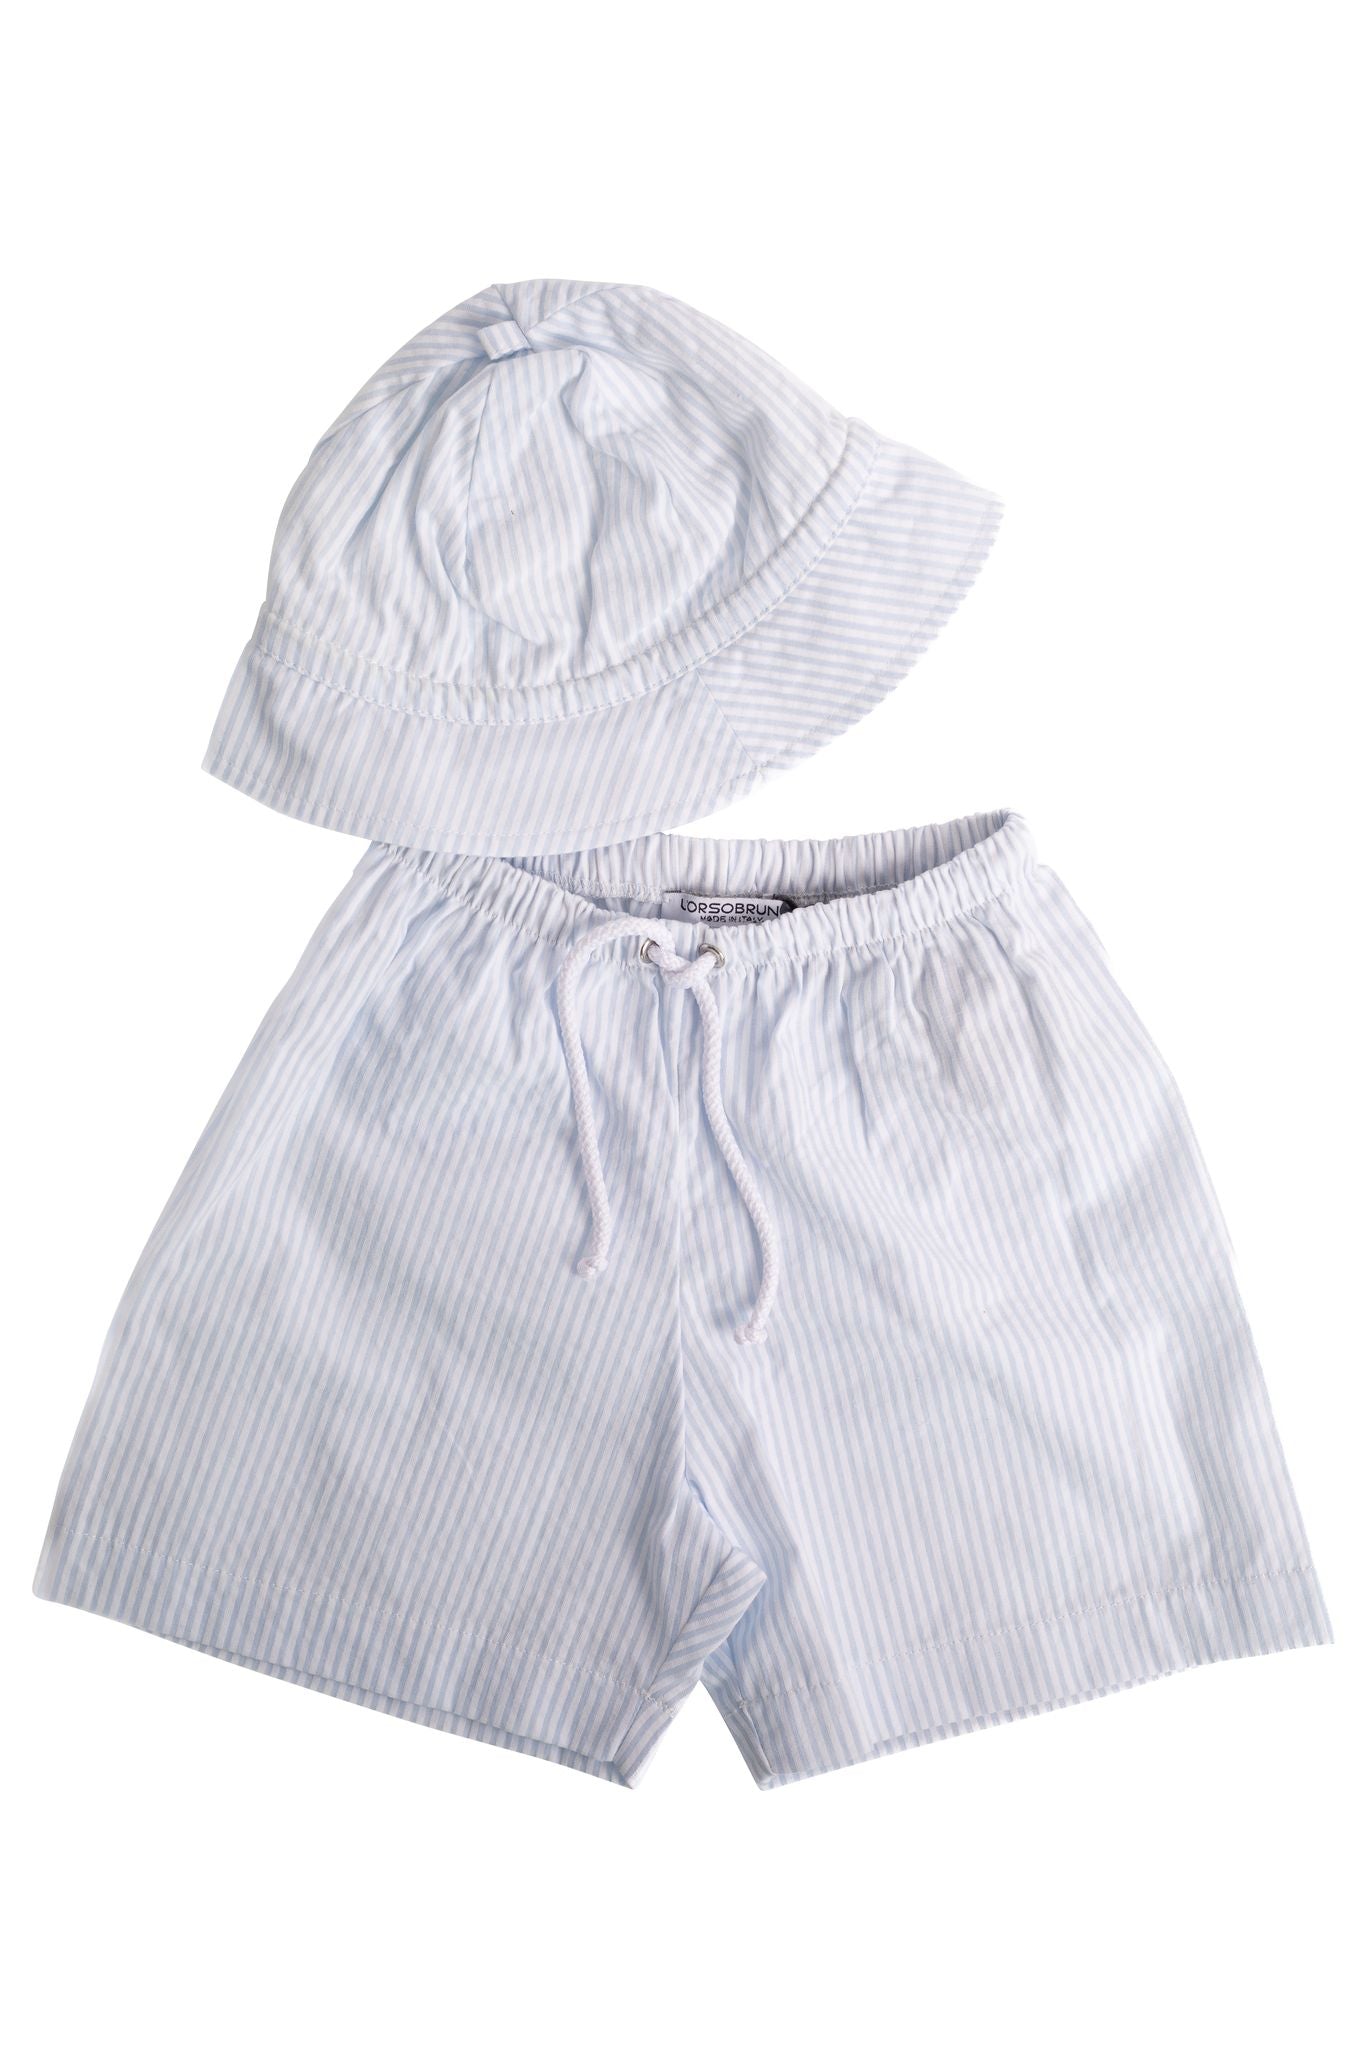 Shorts - Blue & White Stripe - L'orsobruno